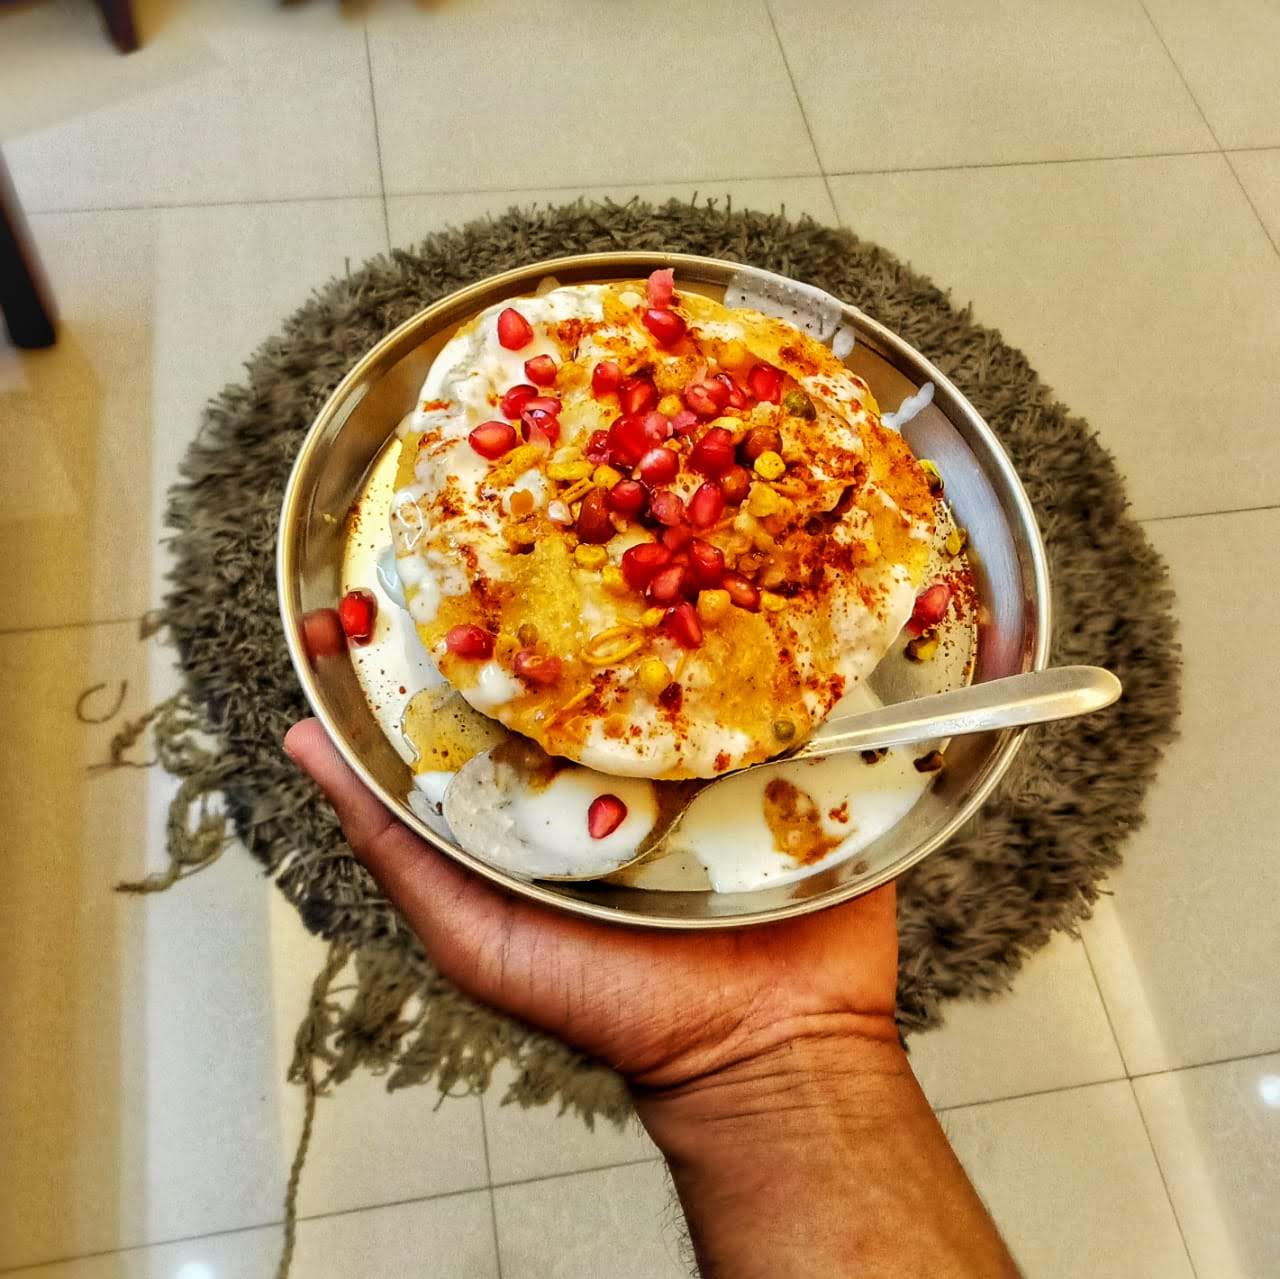 Kachori-favourite breakfast snack in Northern India